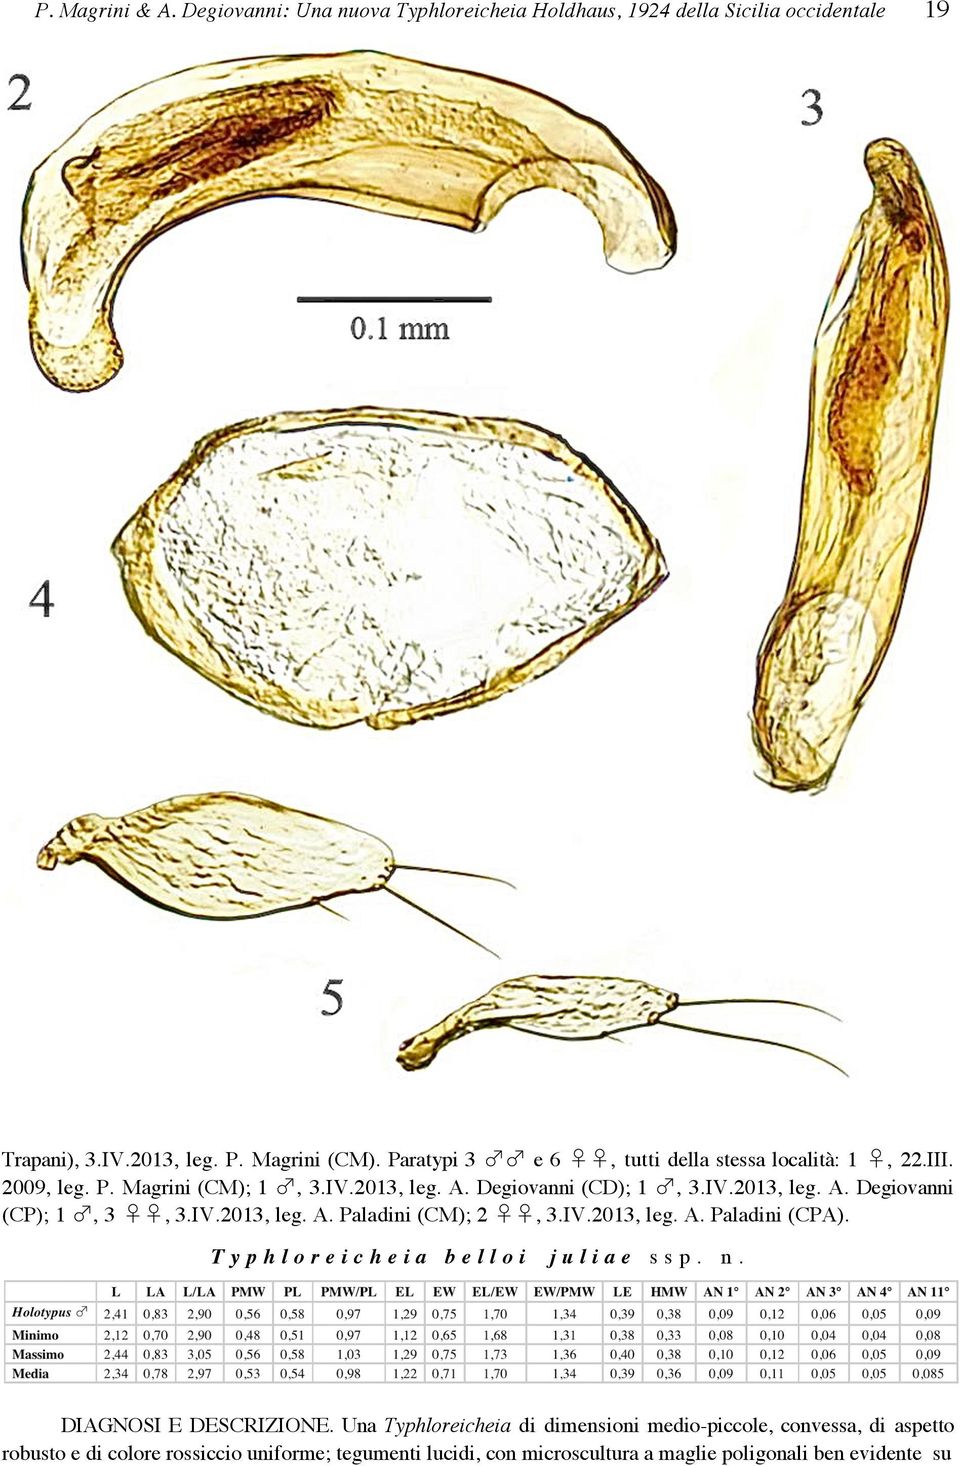 IV.2013, leg. A. Paladini (CM); 2, 3.IV.2013, leg. A. Paladini (CPA). Typhloreicheia belloi juliae ssp. n. DIAGNOSI E DESCRIZIONE.